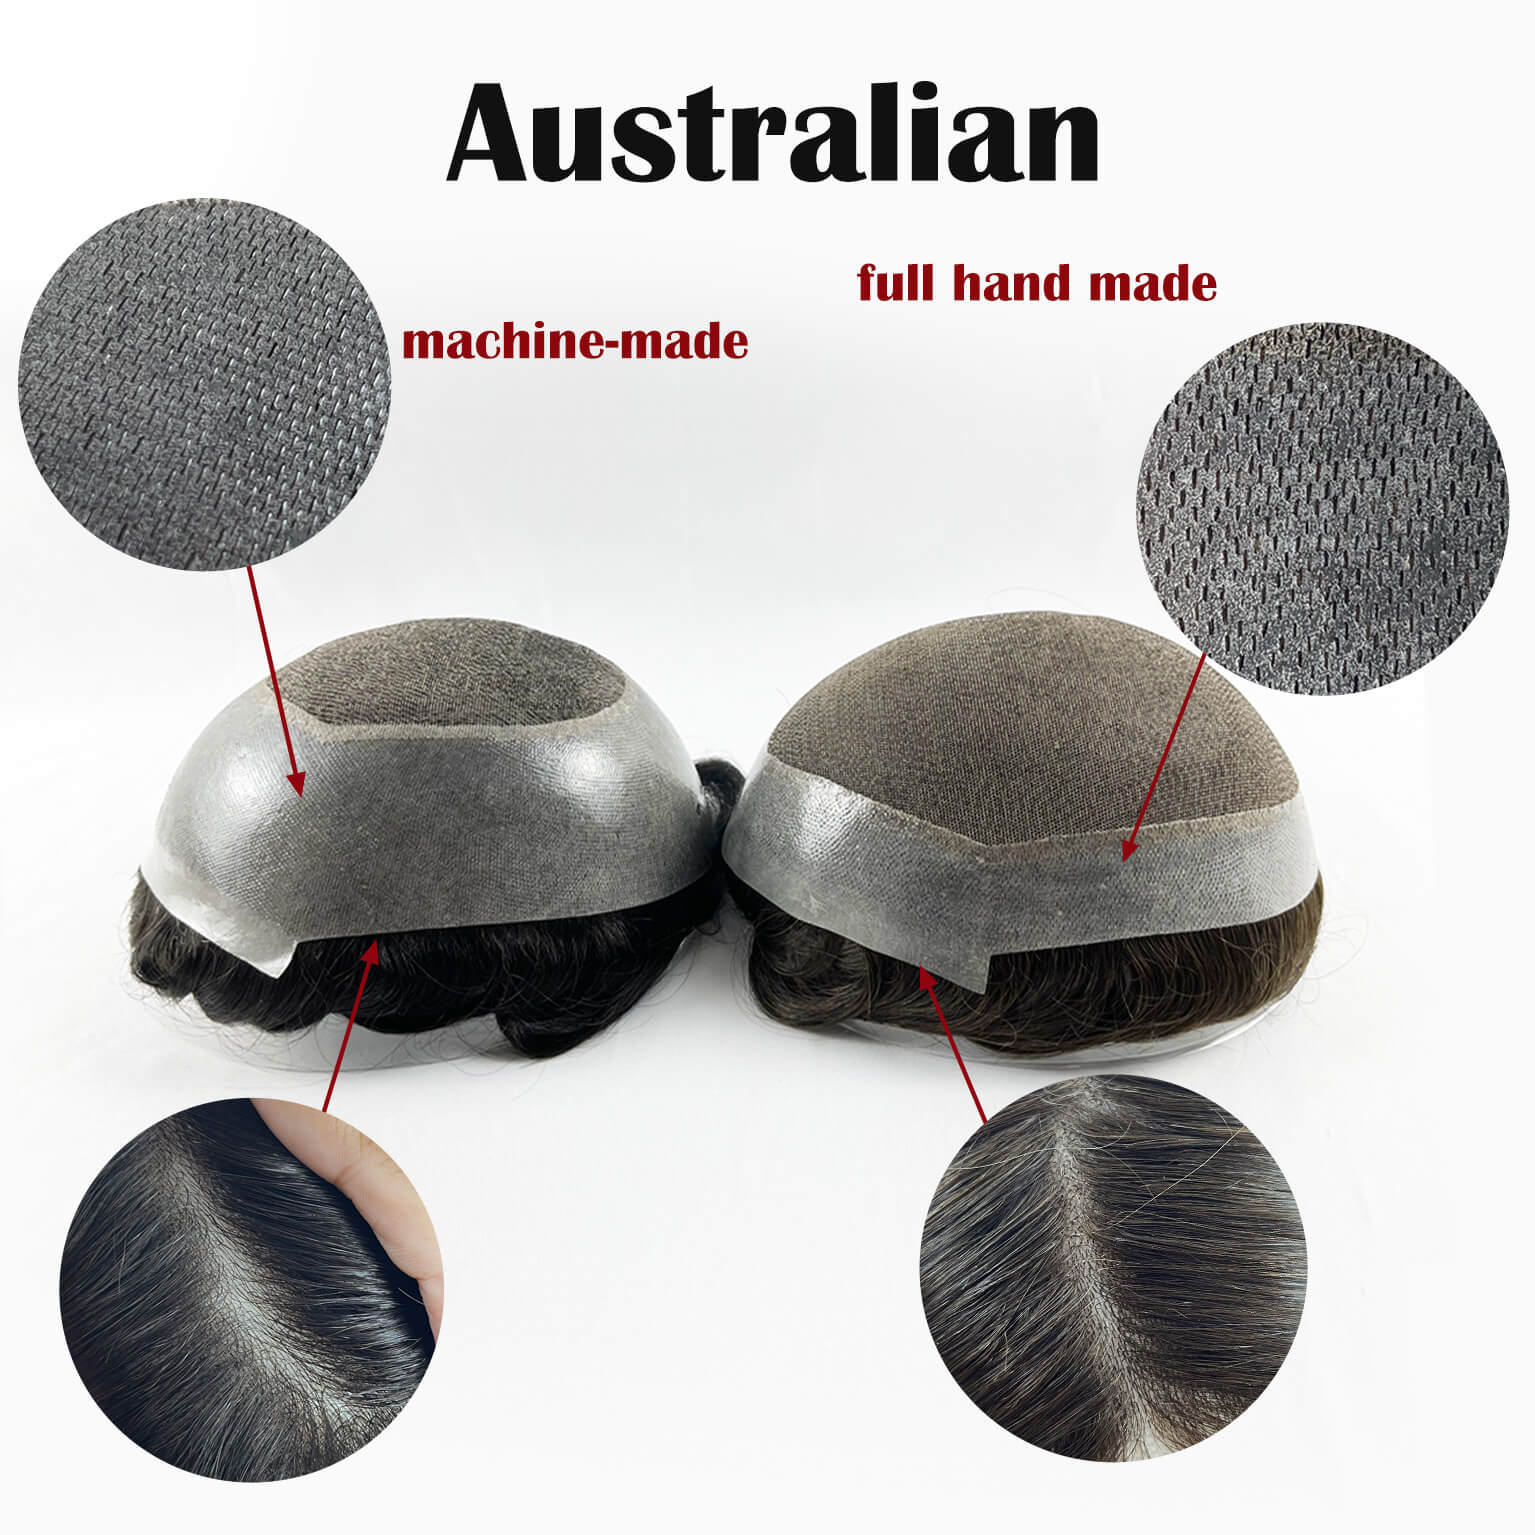 Machine made australian male wigs.jpg